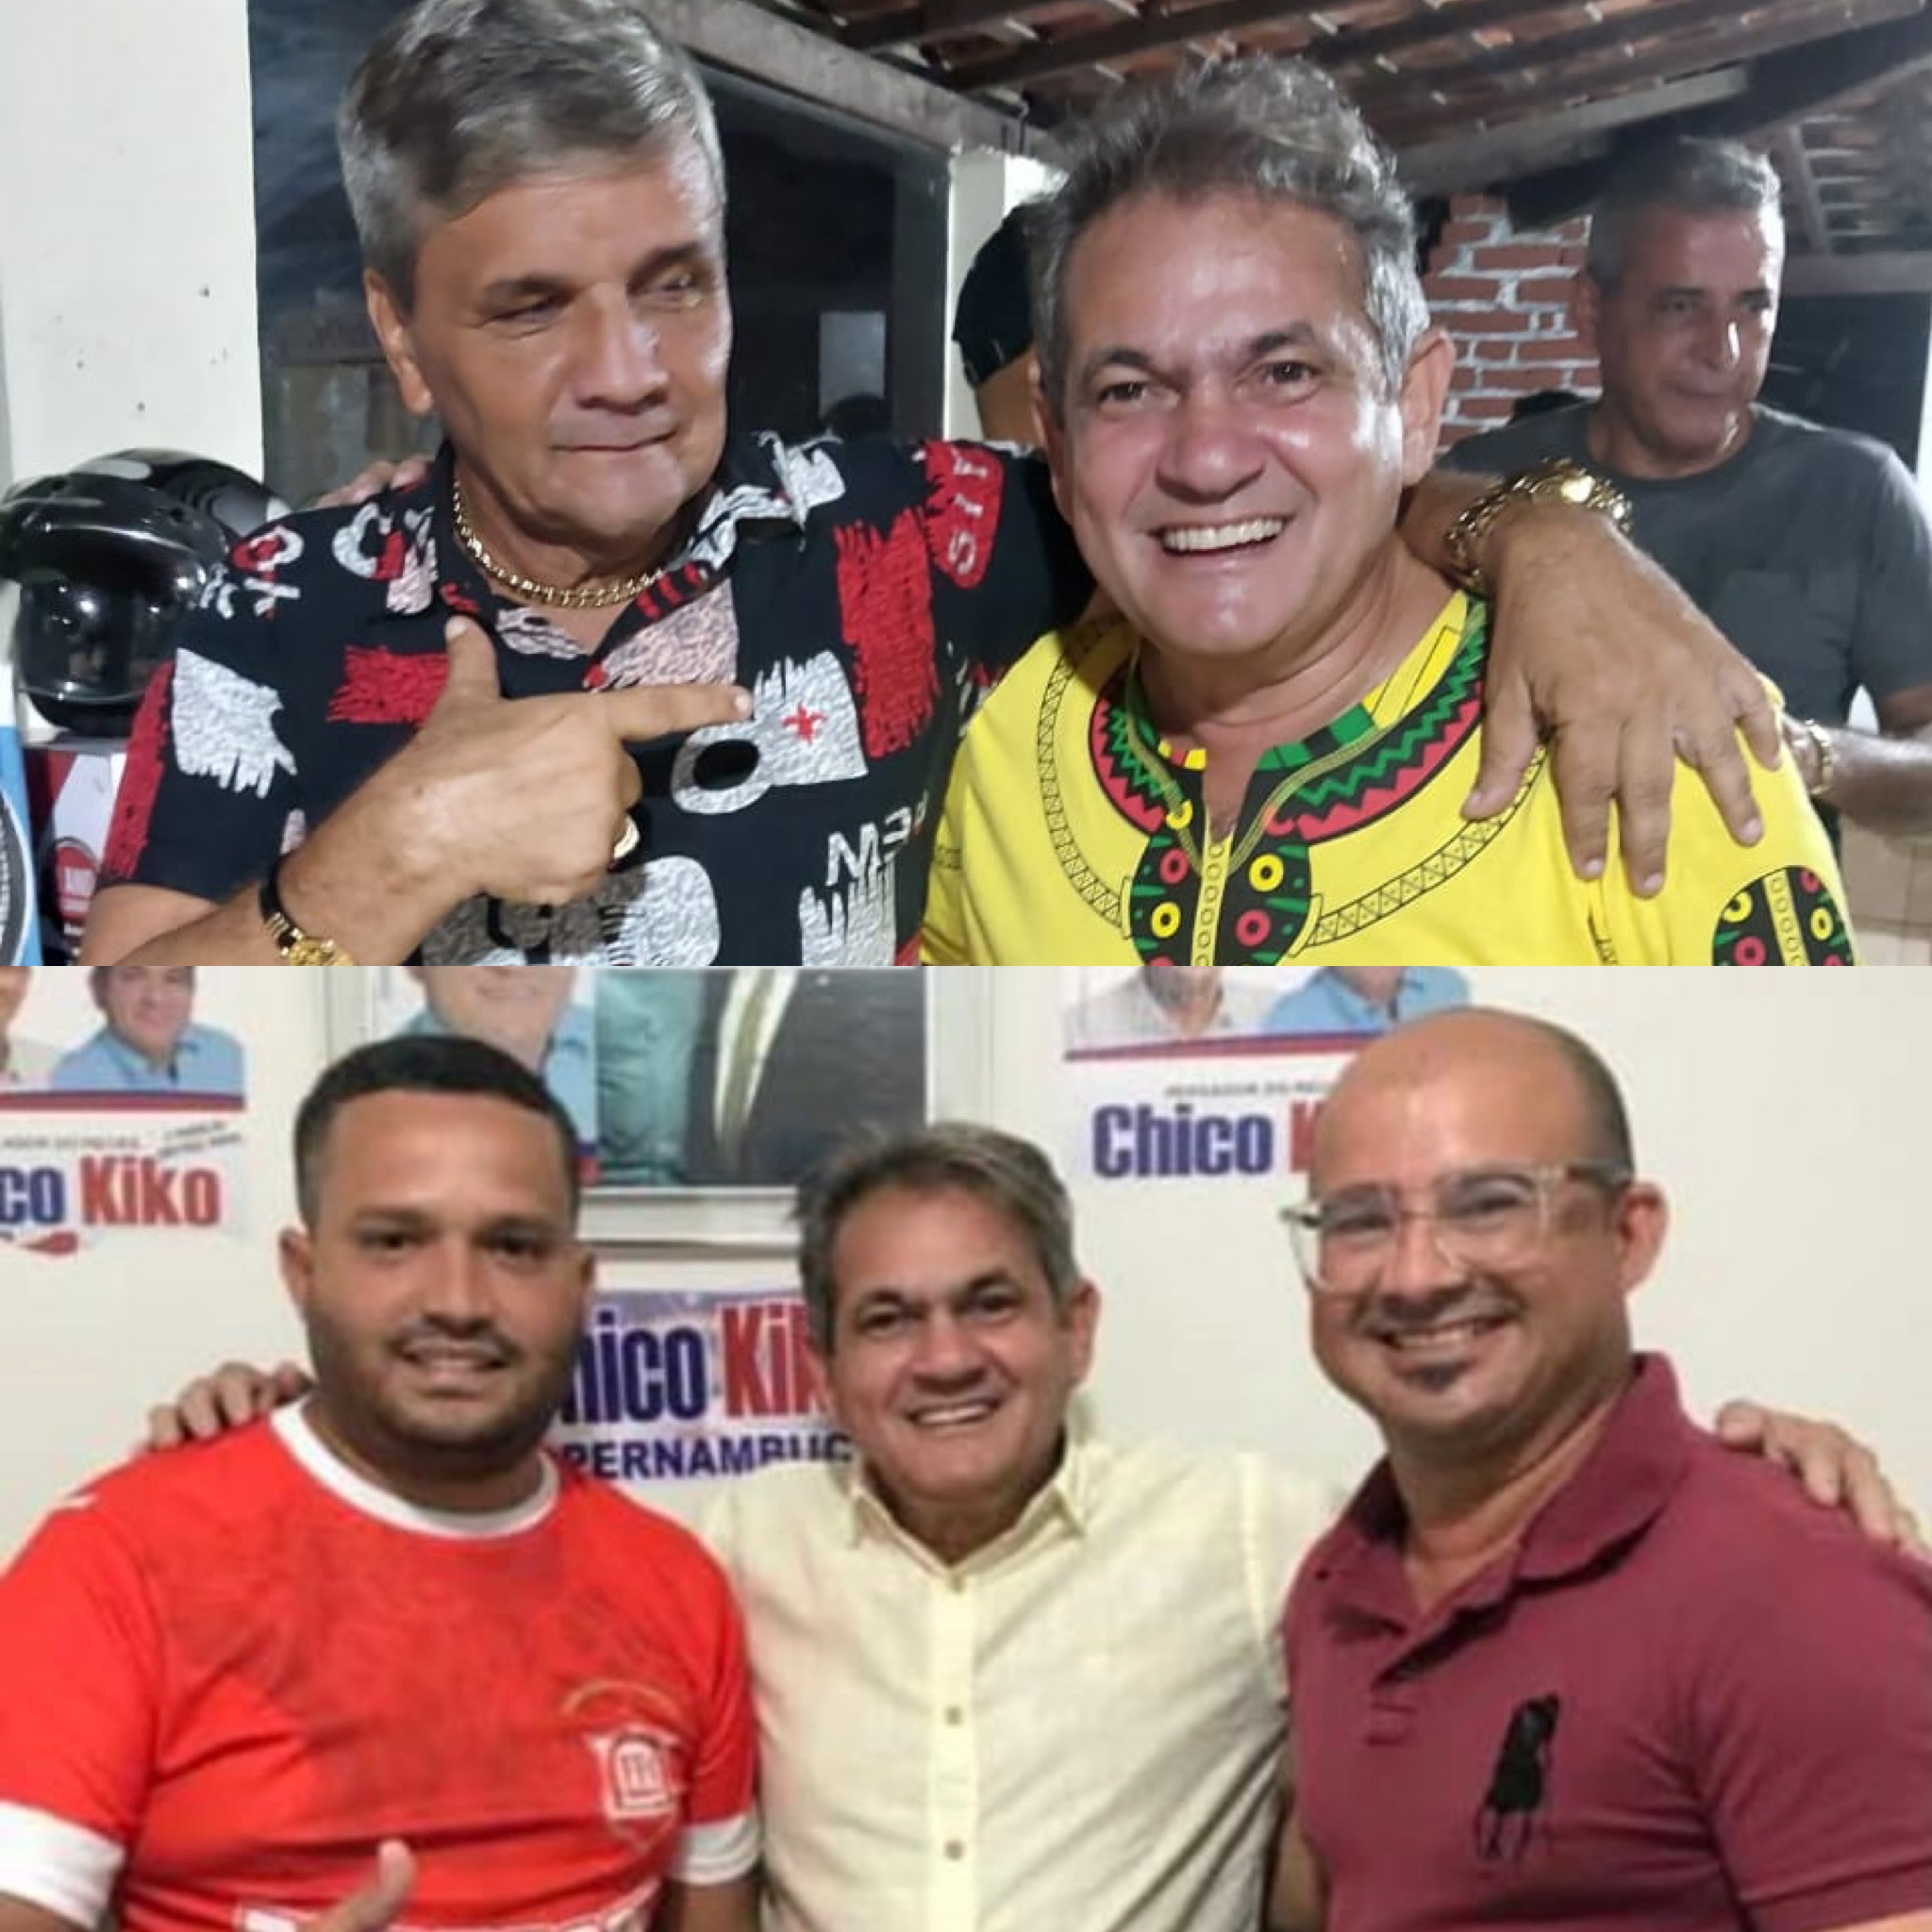 Chico Kiko Jonas Ferreira Alan Baralho Recife